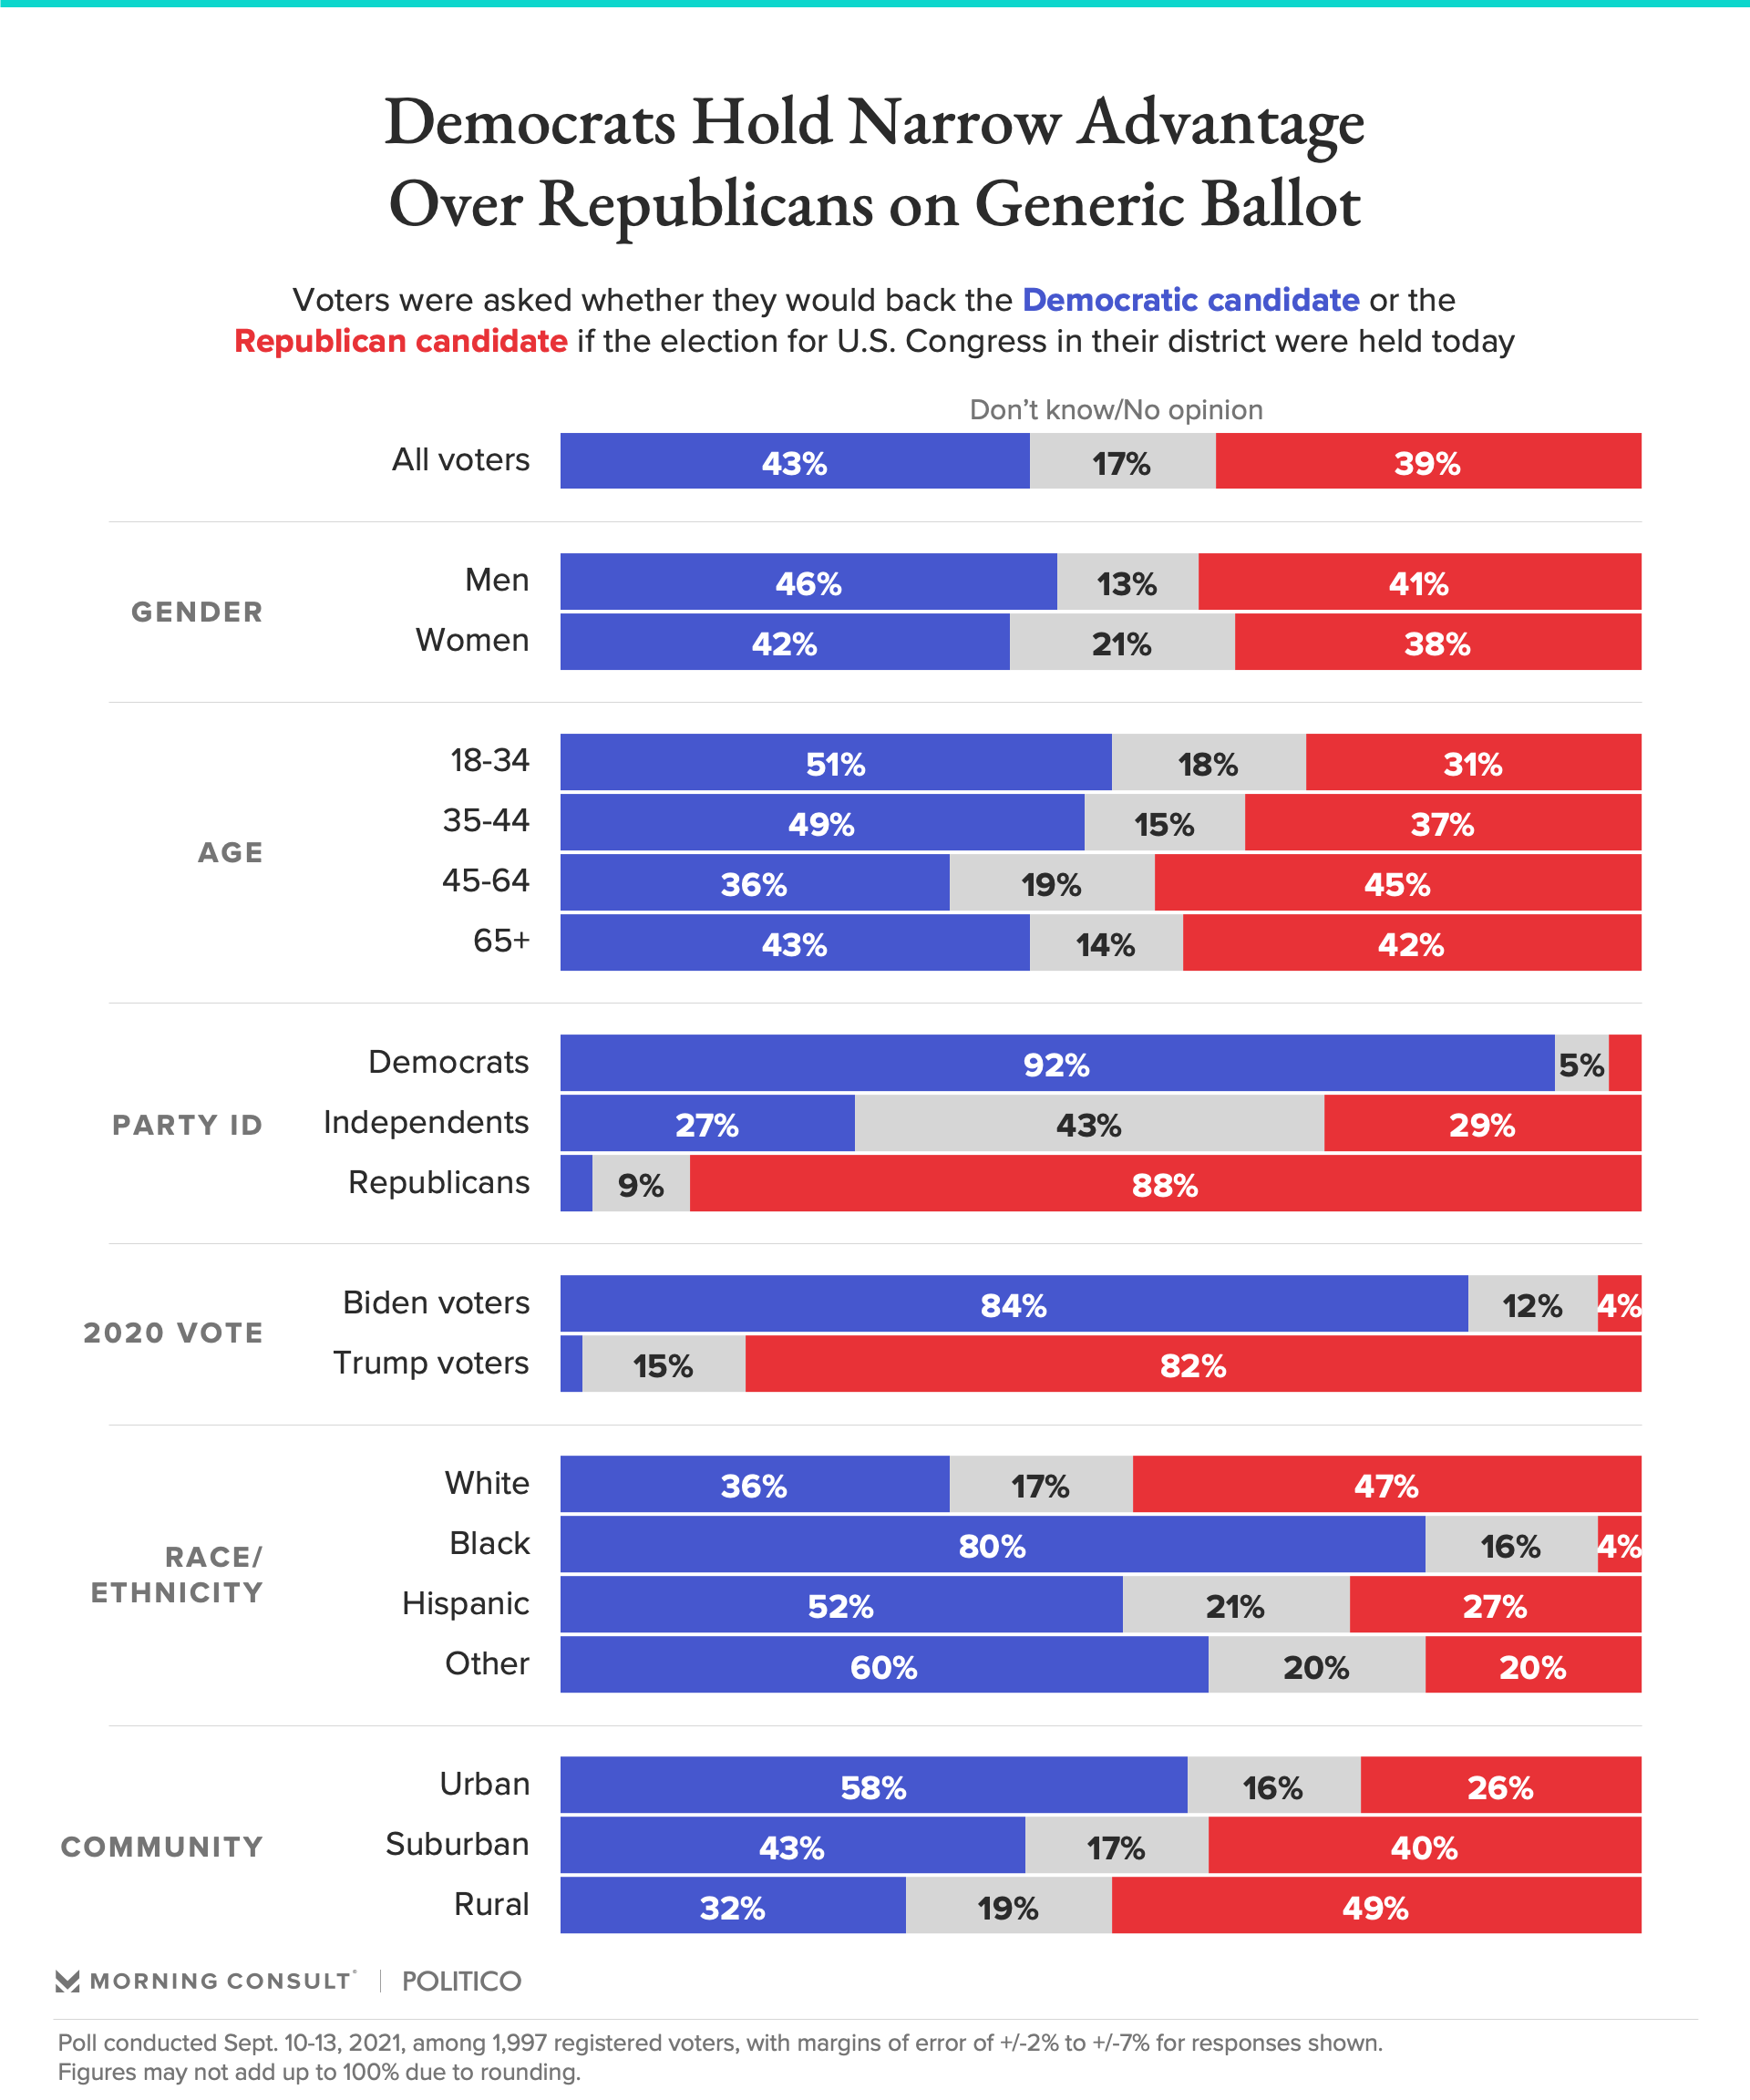 Congressional Democrats Lead on Generic Ballot, but Republicans Have